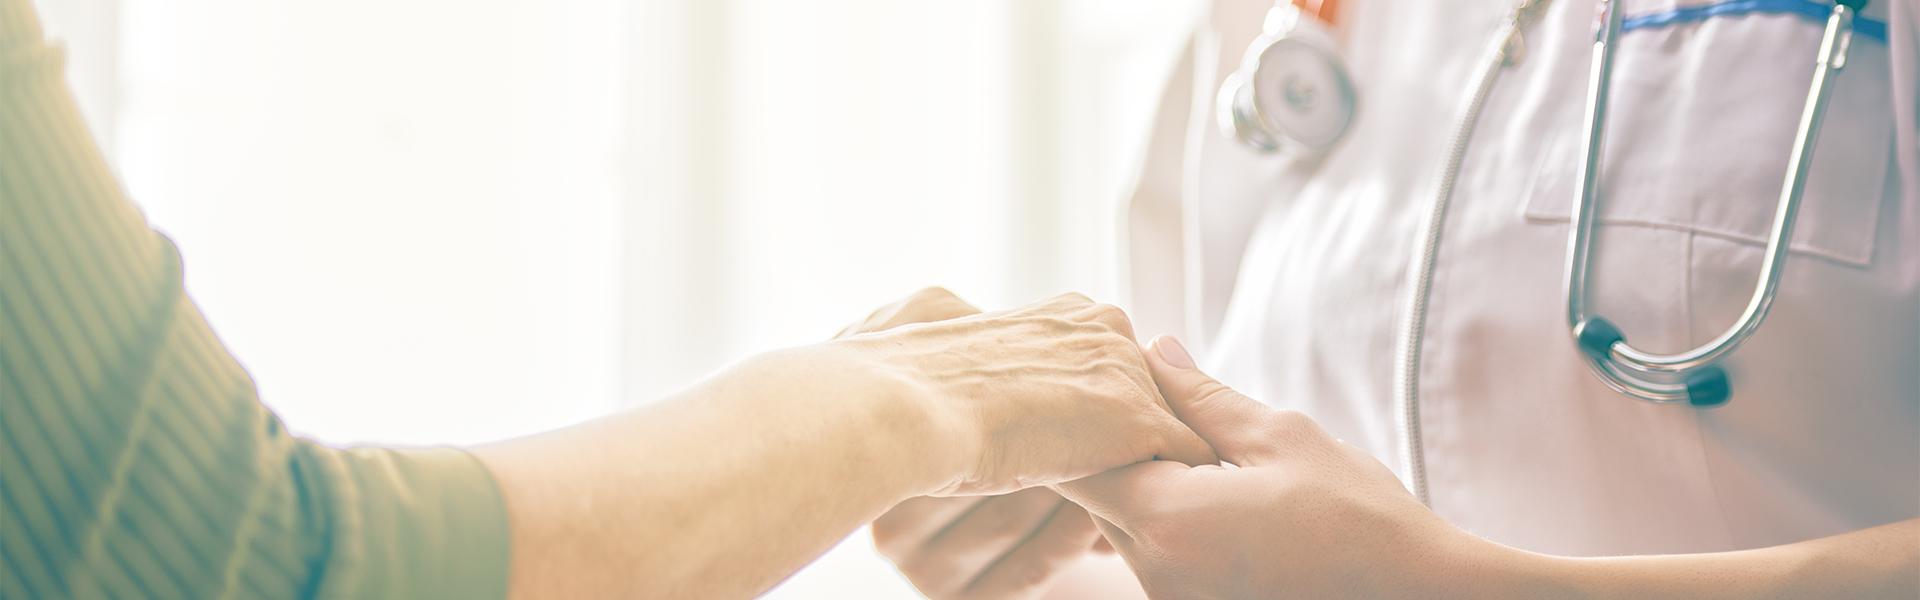 A nurse holding an elder's hand showing care